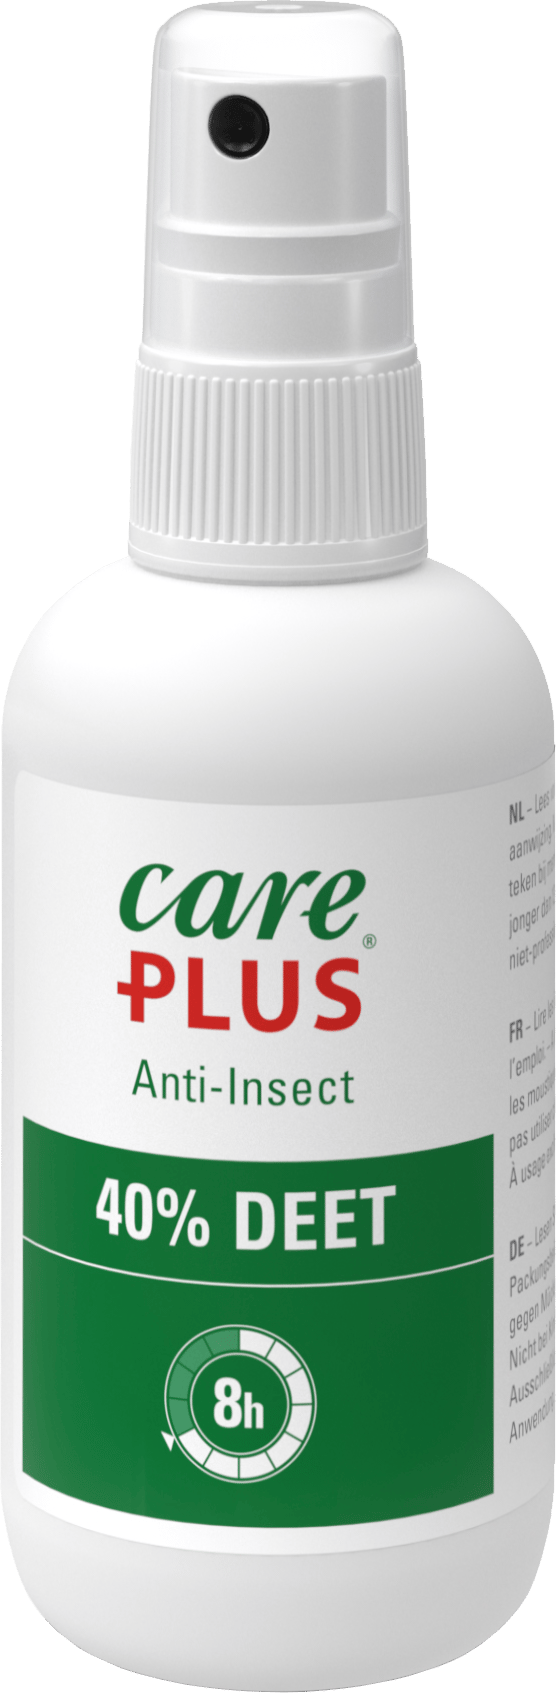 Care Plus Anti-Insect DEET 40% 100 ml Nocolour Care Plus